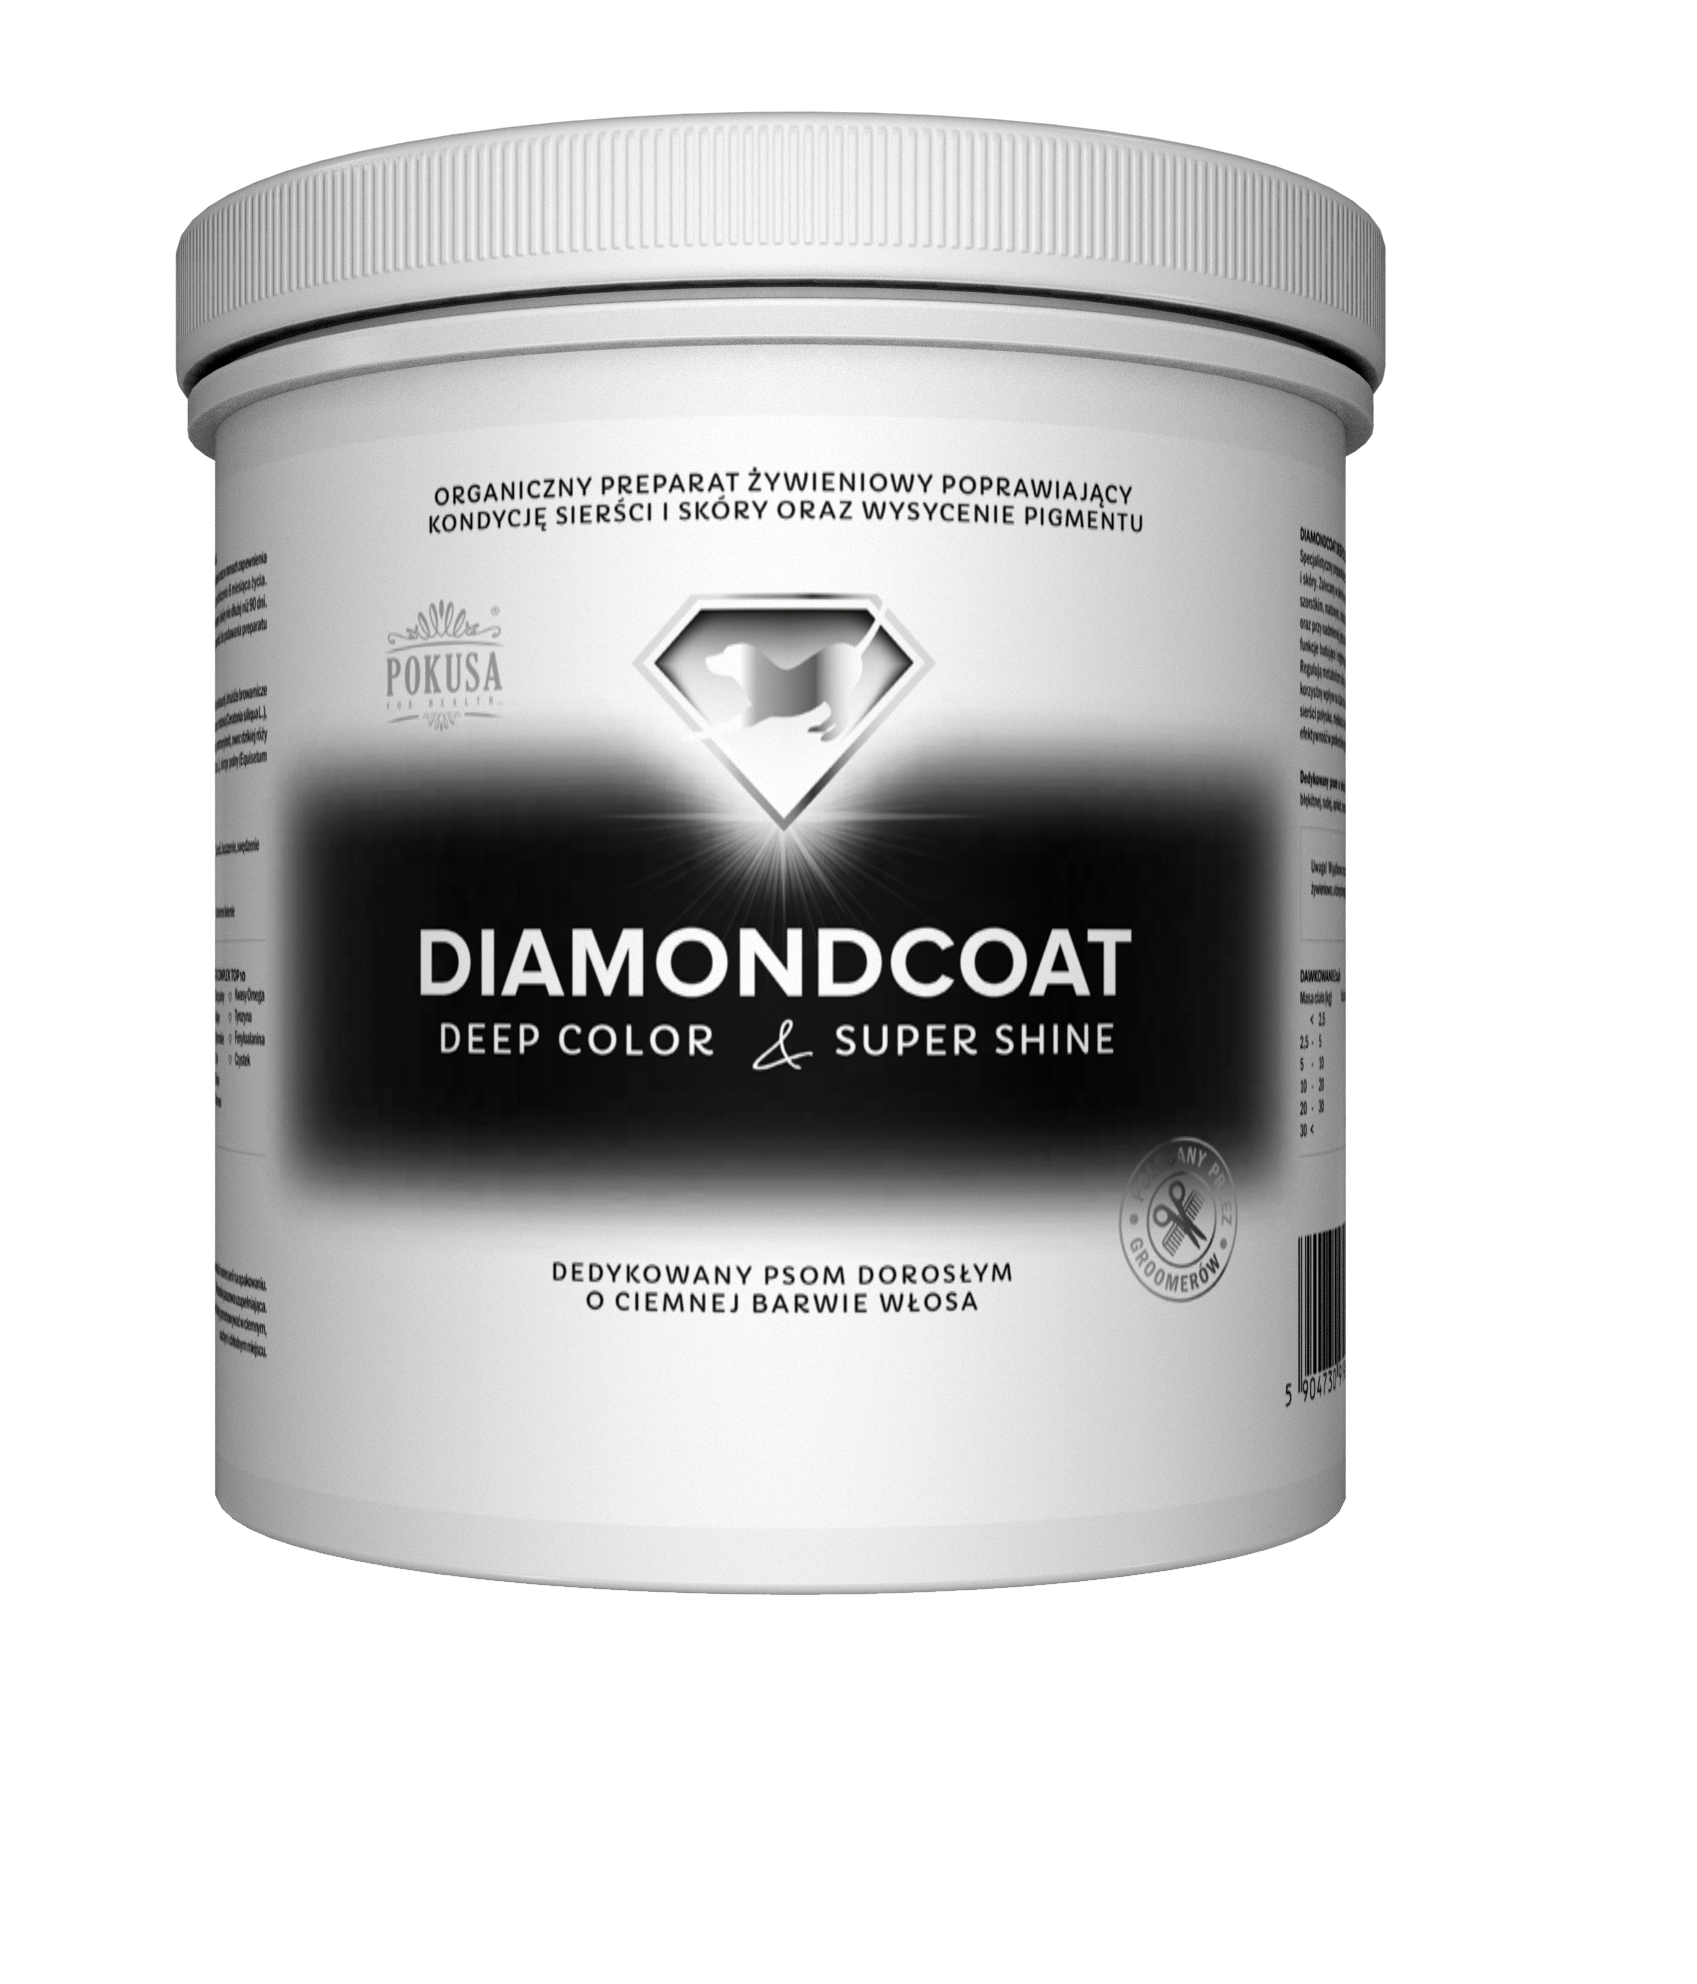 POKUSA DiamondCoat DeepColor & SuperShine